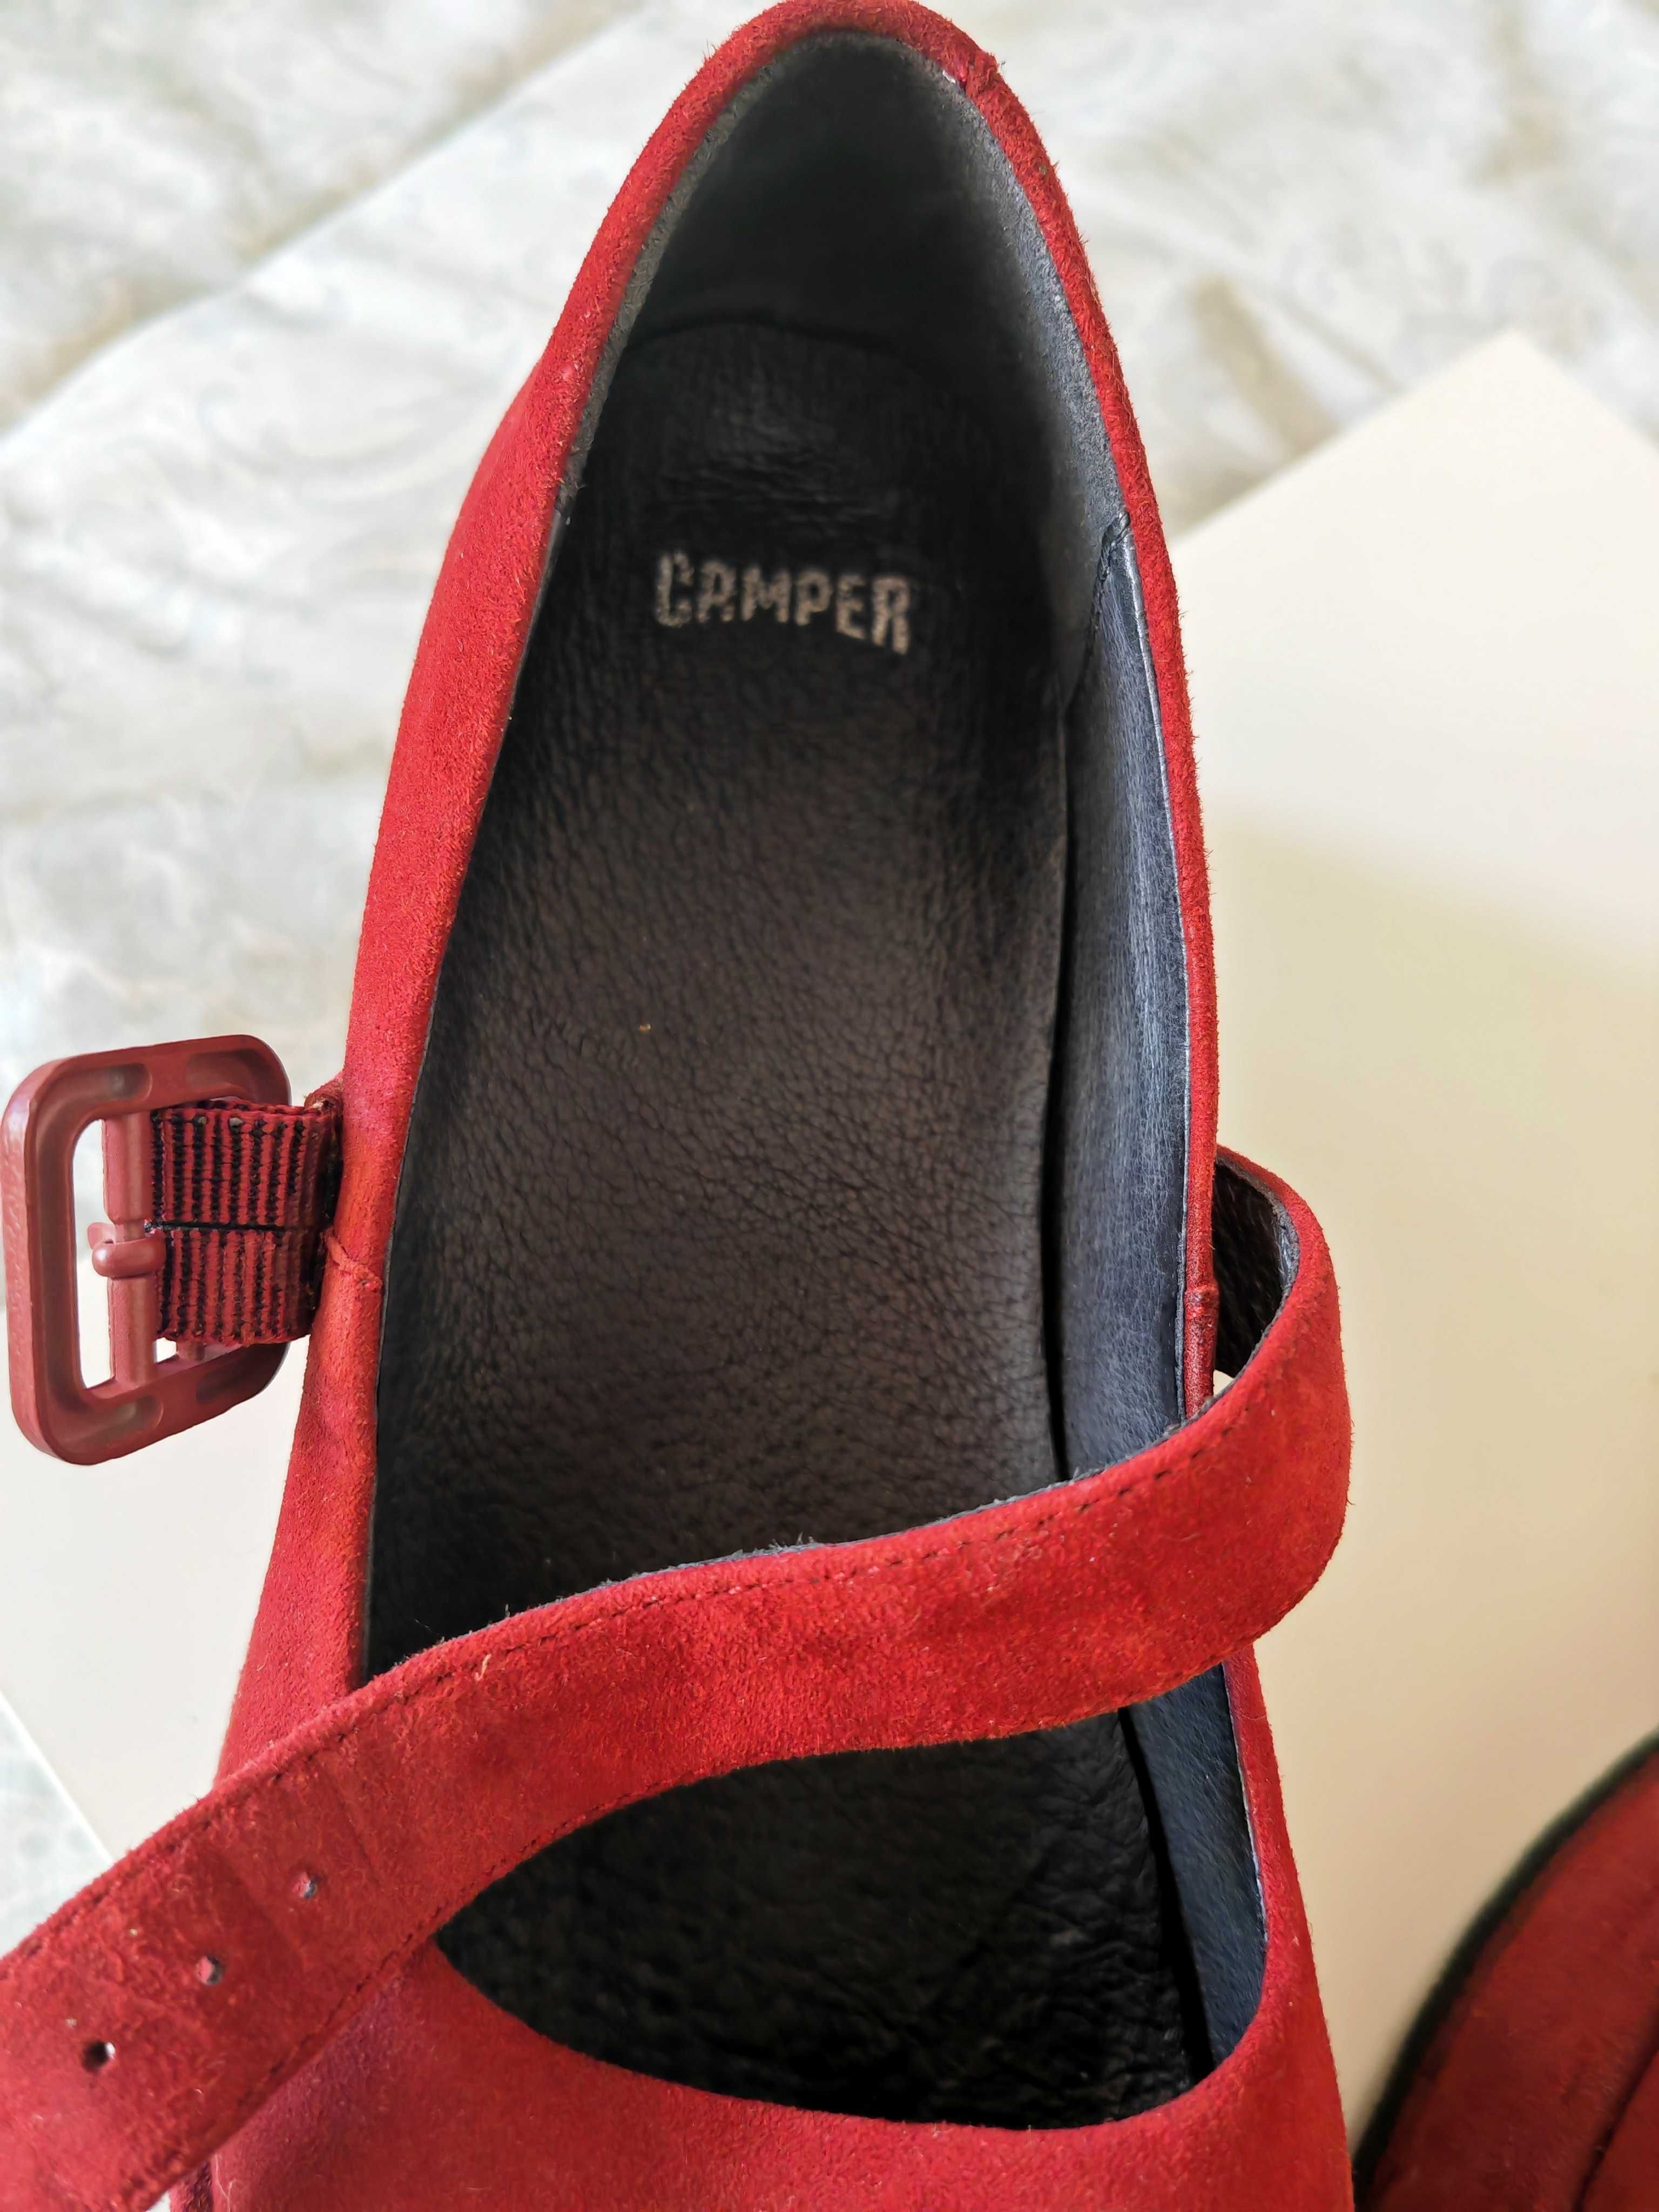 Червени обувки Camper, номер 36